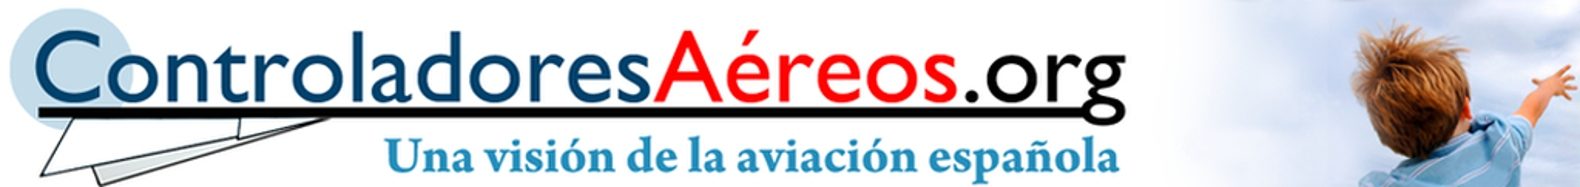 telhuacomm – Perfil – Foro Controladores Aéreos.org